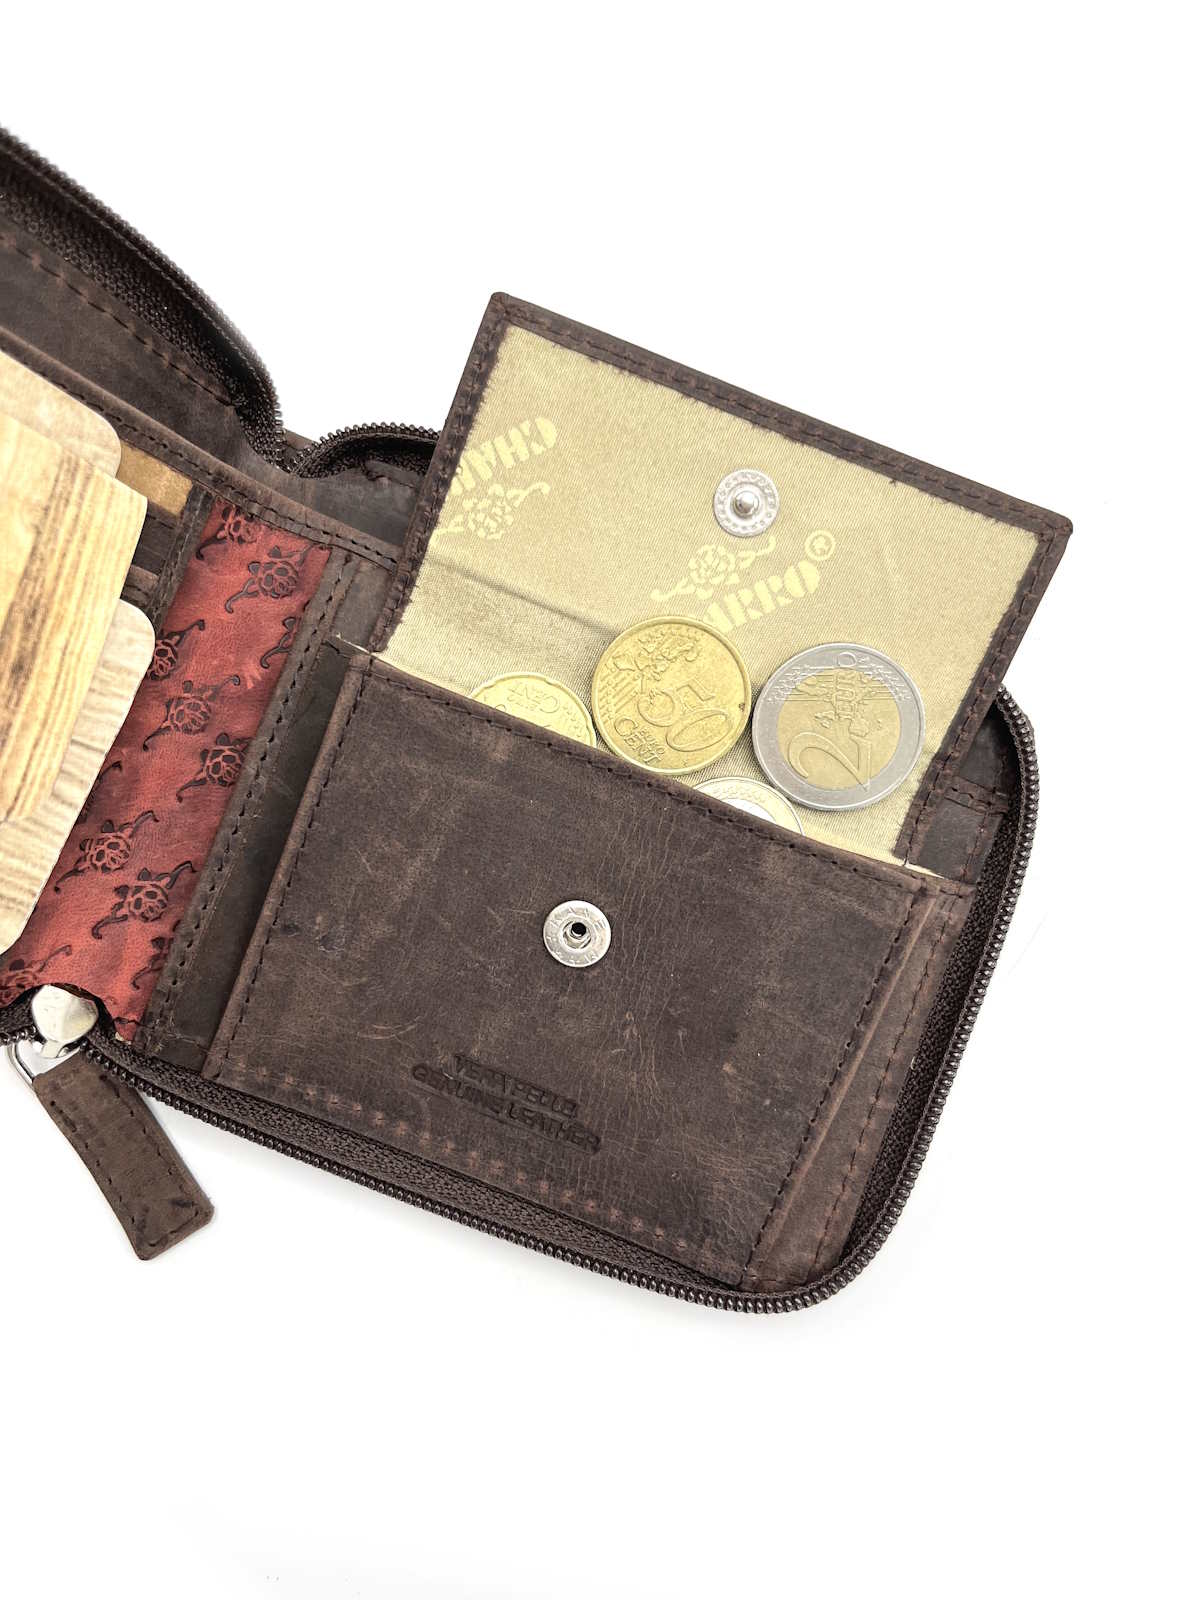 Genuine leather wallet, Brand Charro, vintage effect, art. HU-31556